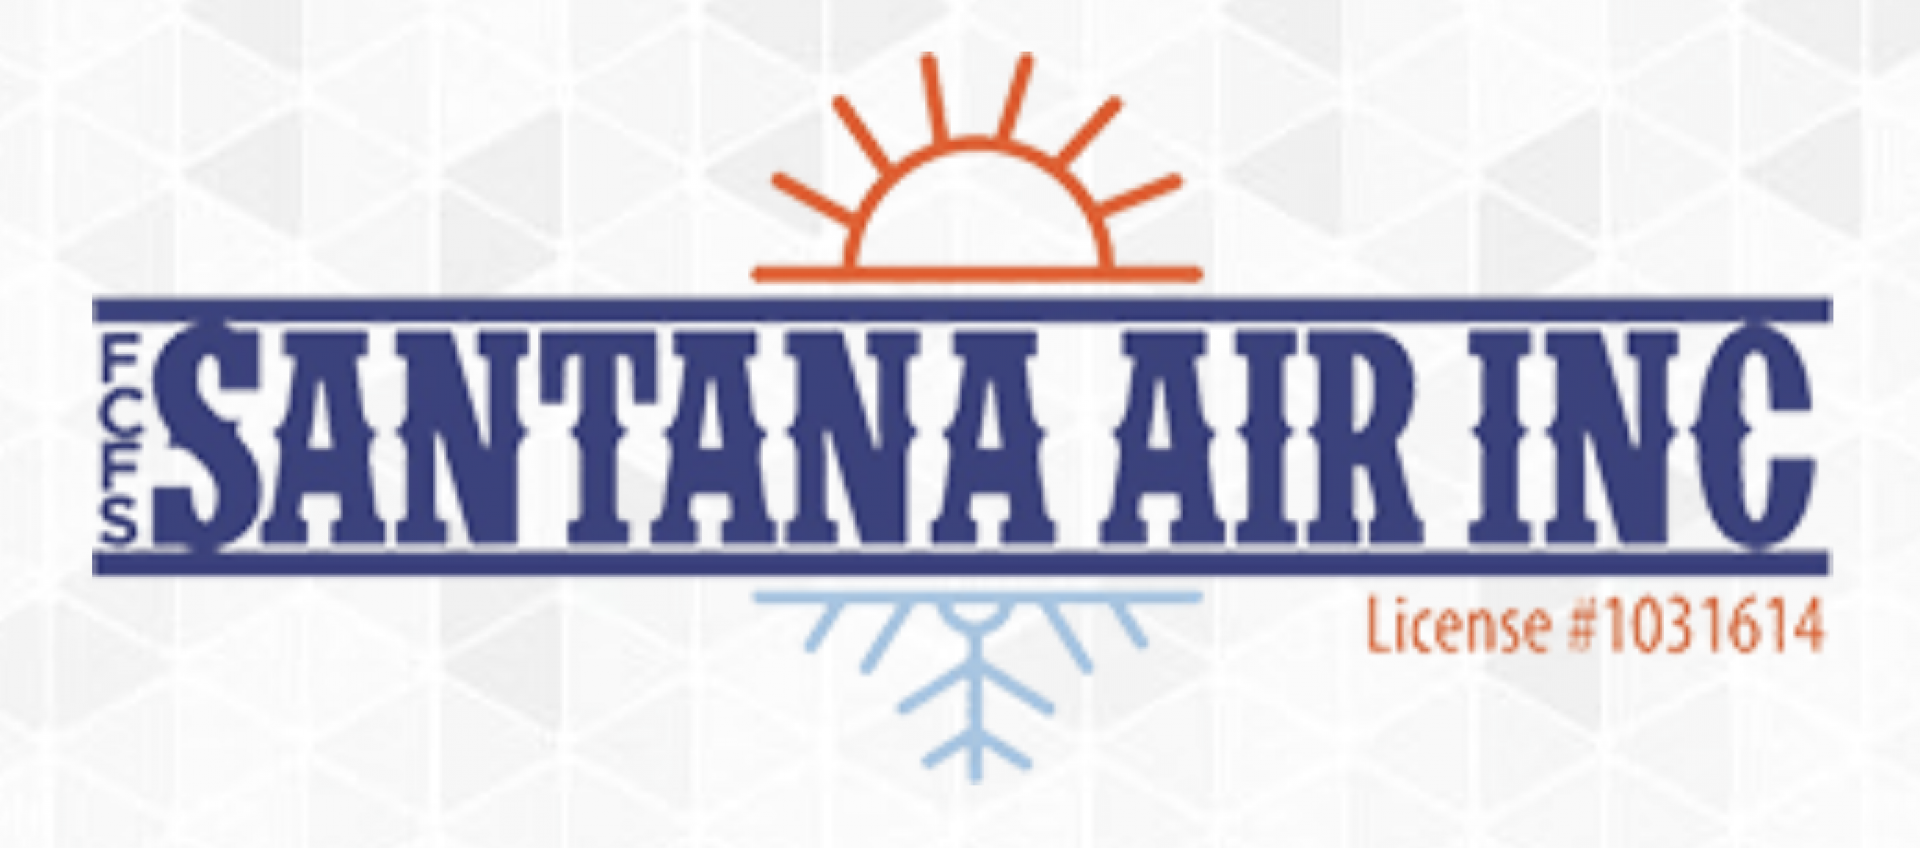 Fcfs Santana Air Inc. company logo